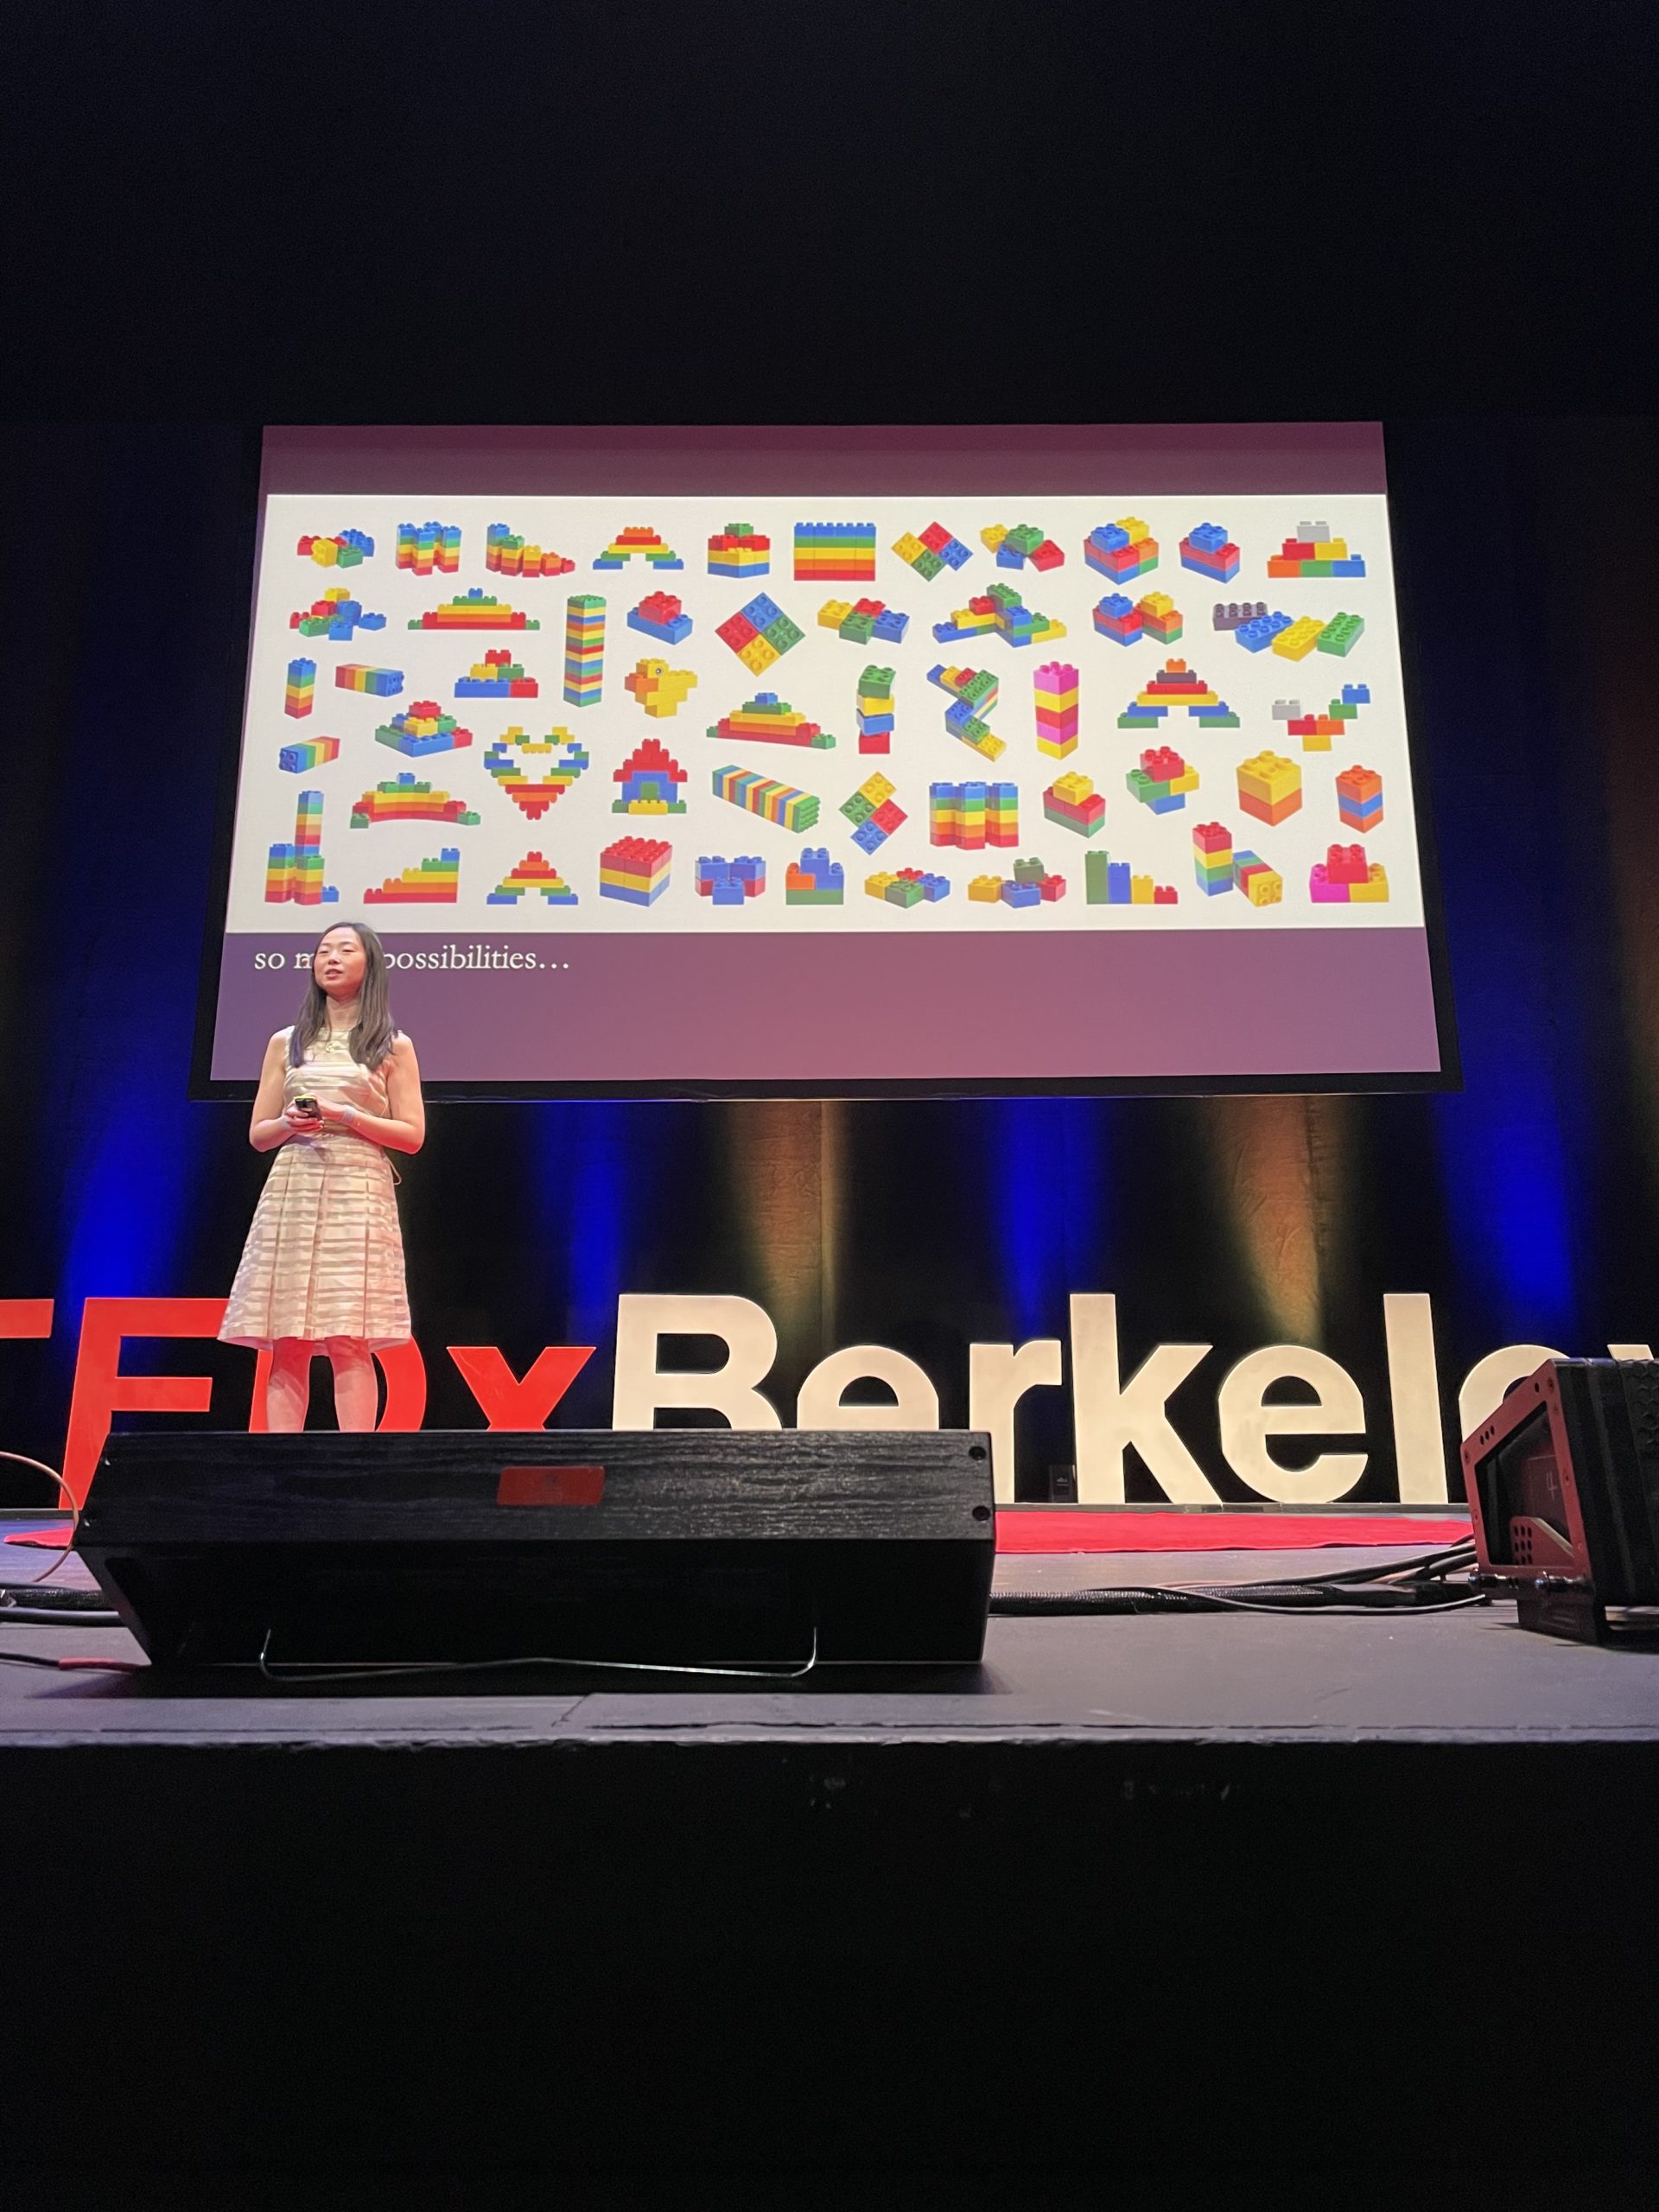 A Recap of TEDxBerkeley 2022